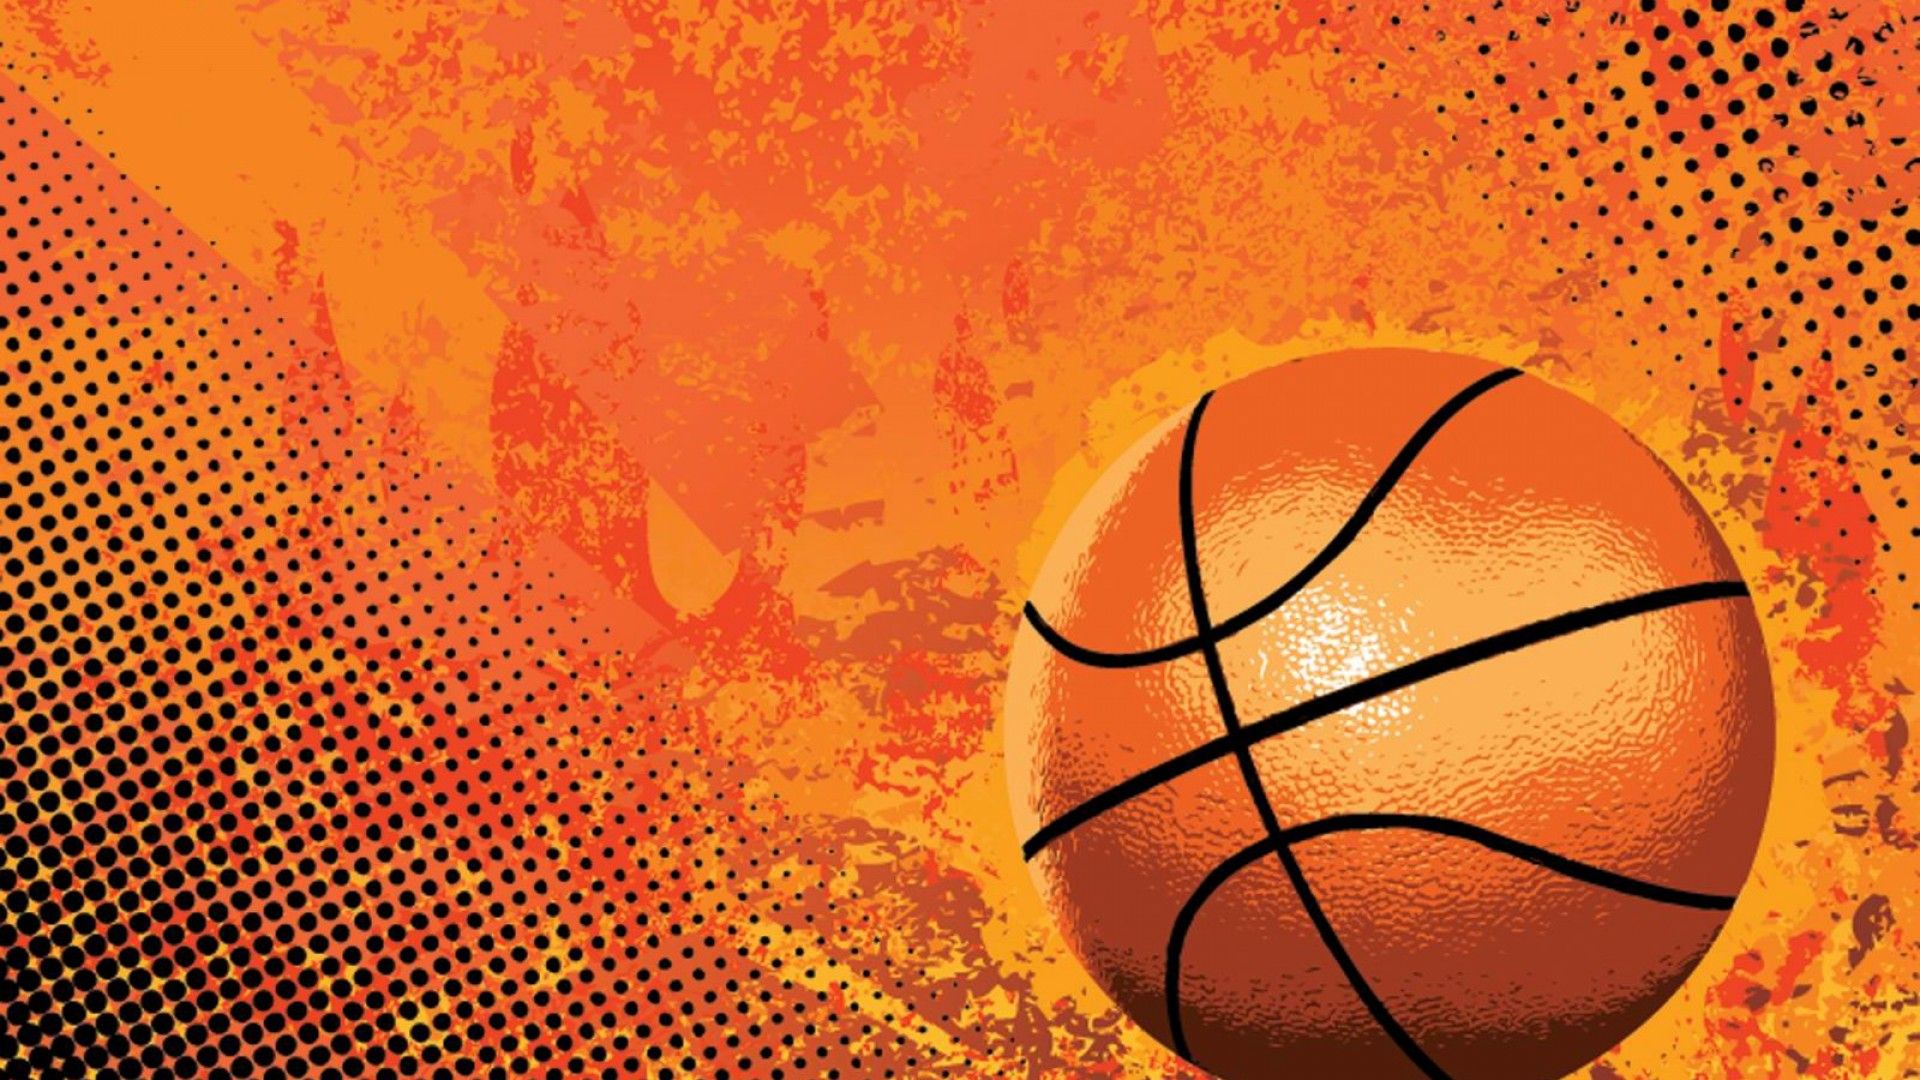 Best Basketball Background